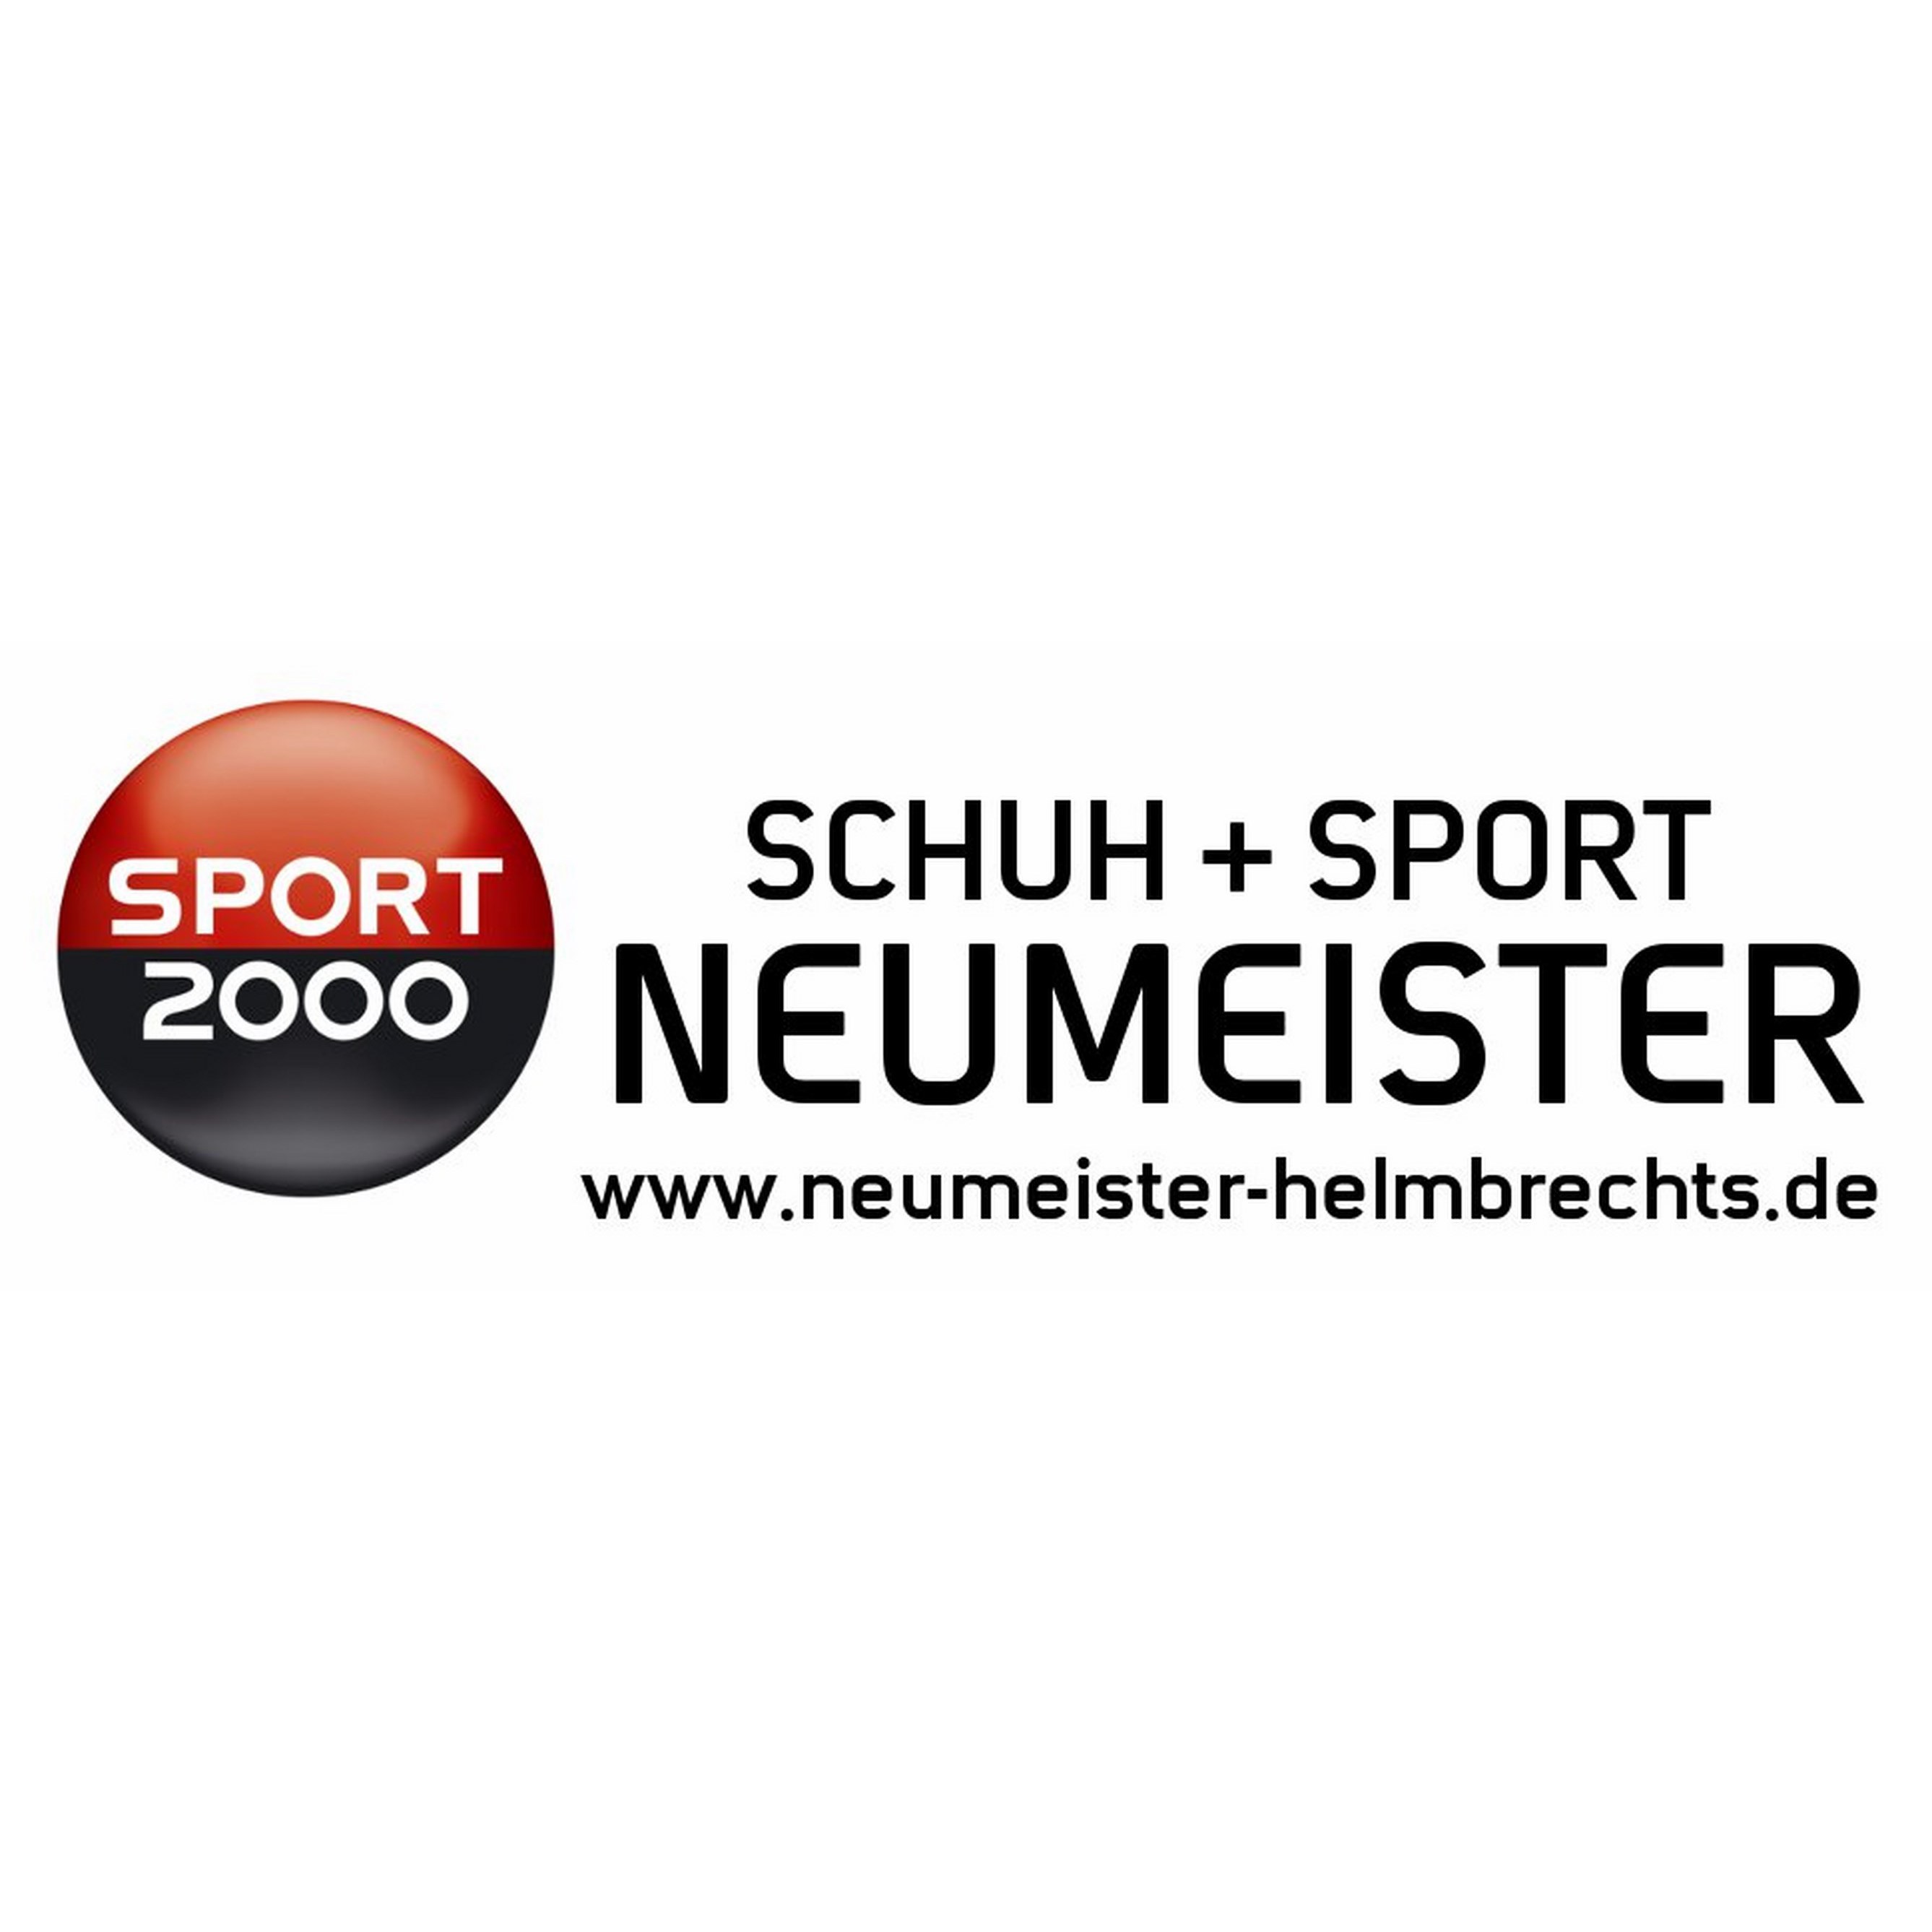 Neumeister in Helmbrechts - Logo